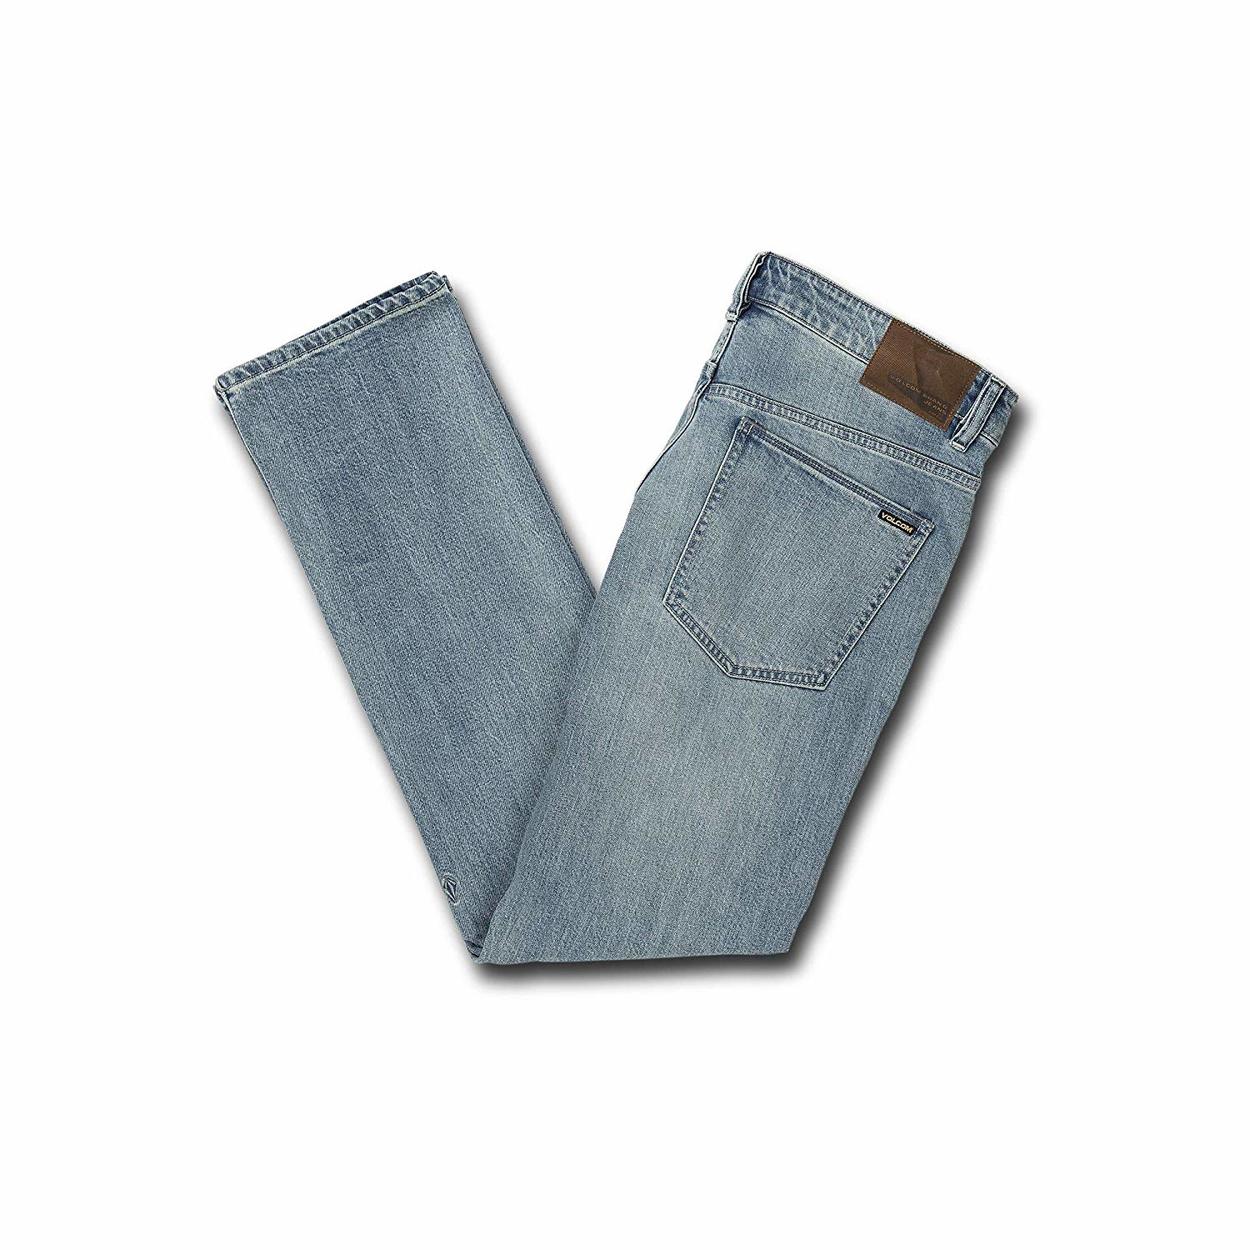 Volcom Solver Modern Straight Jeans - Wide Goods Light